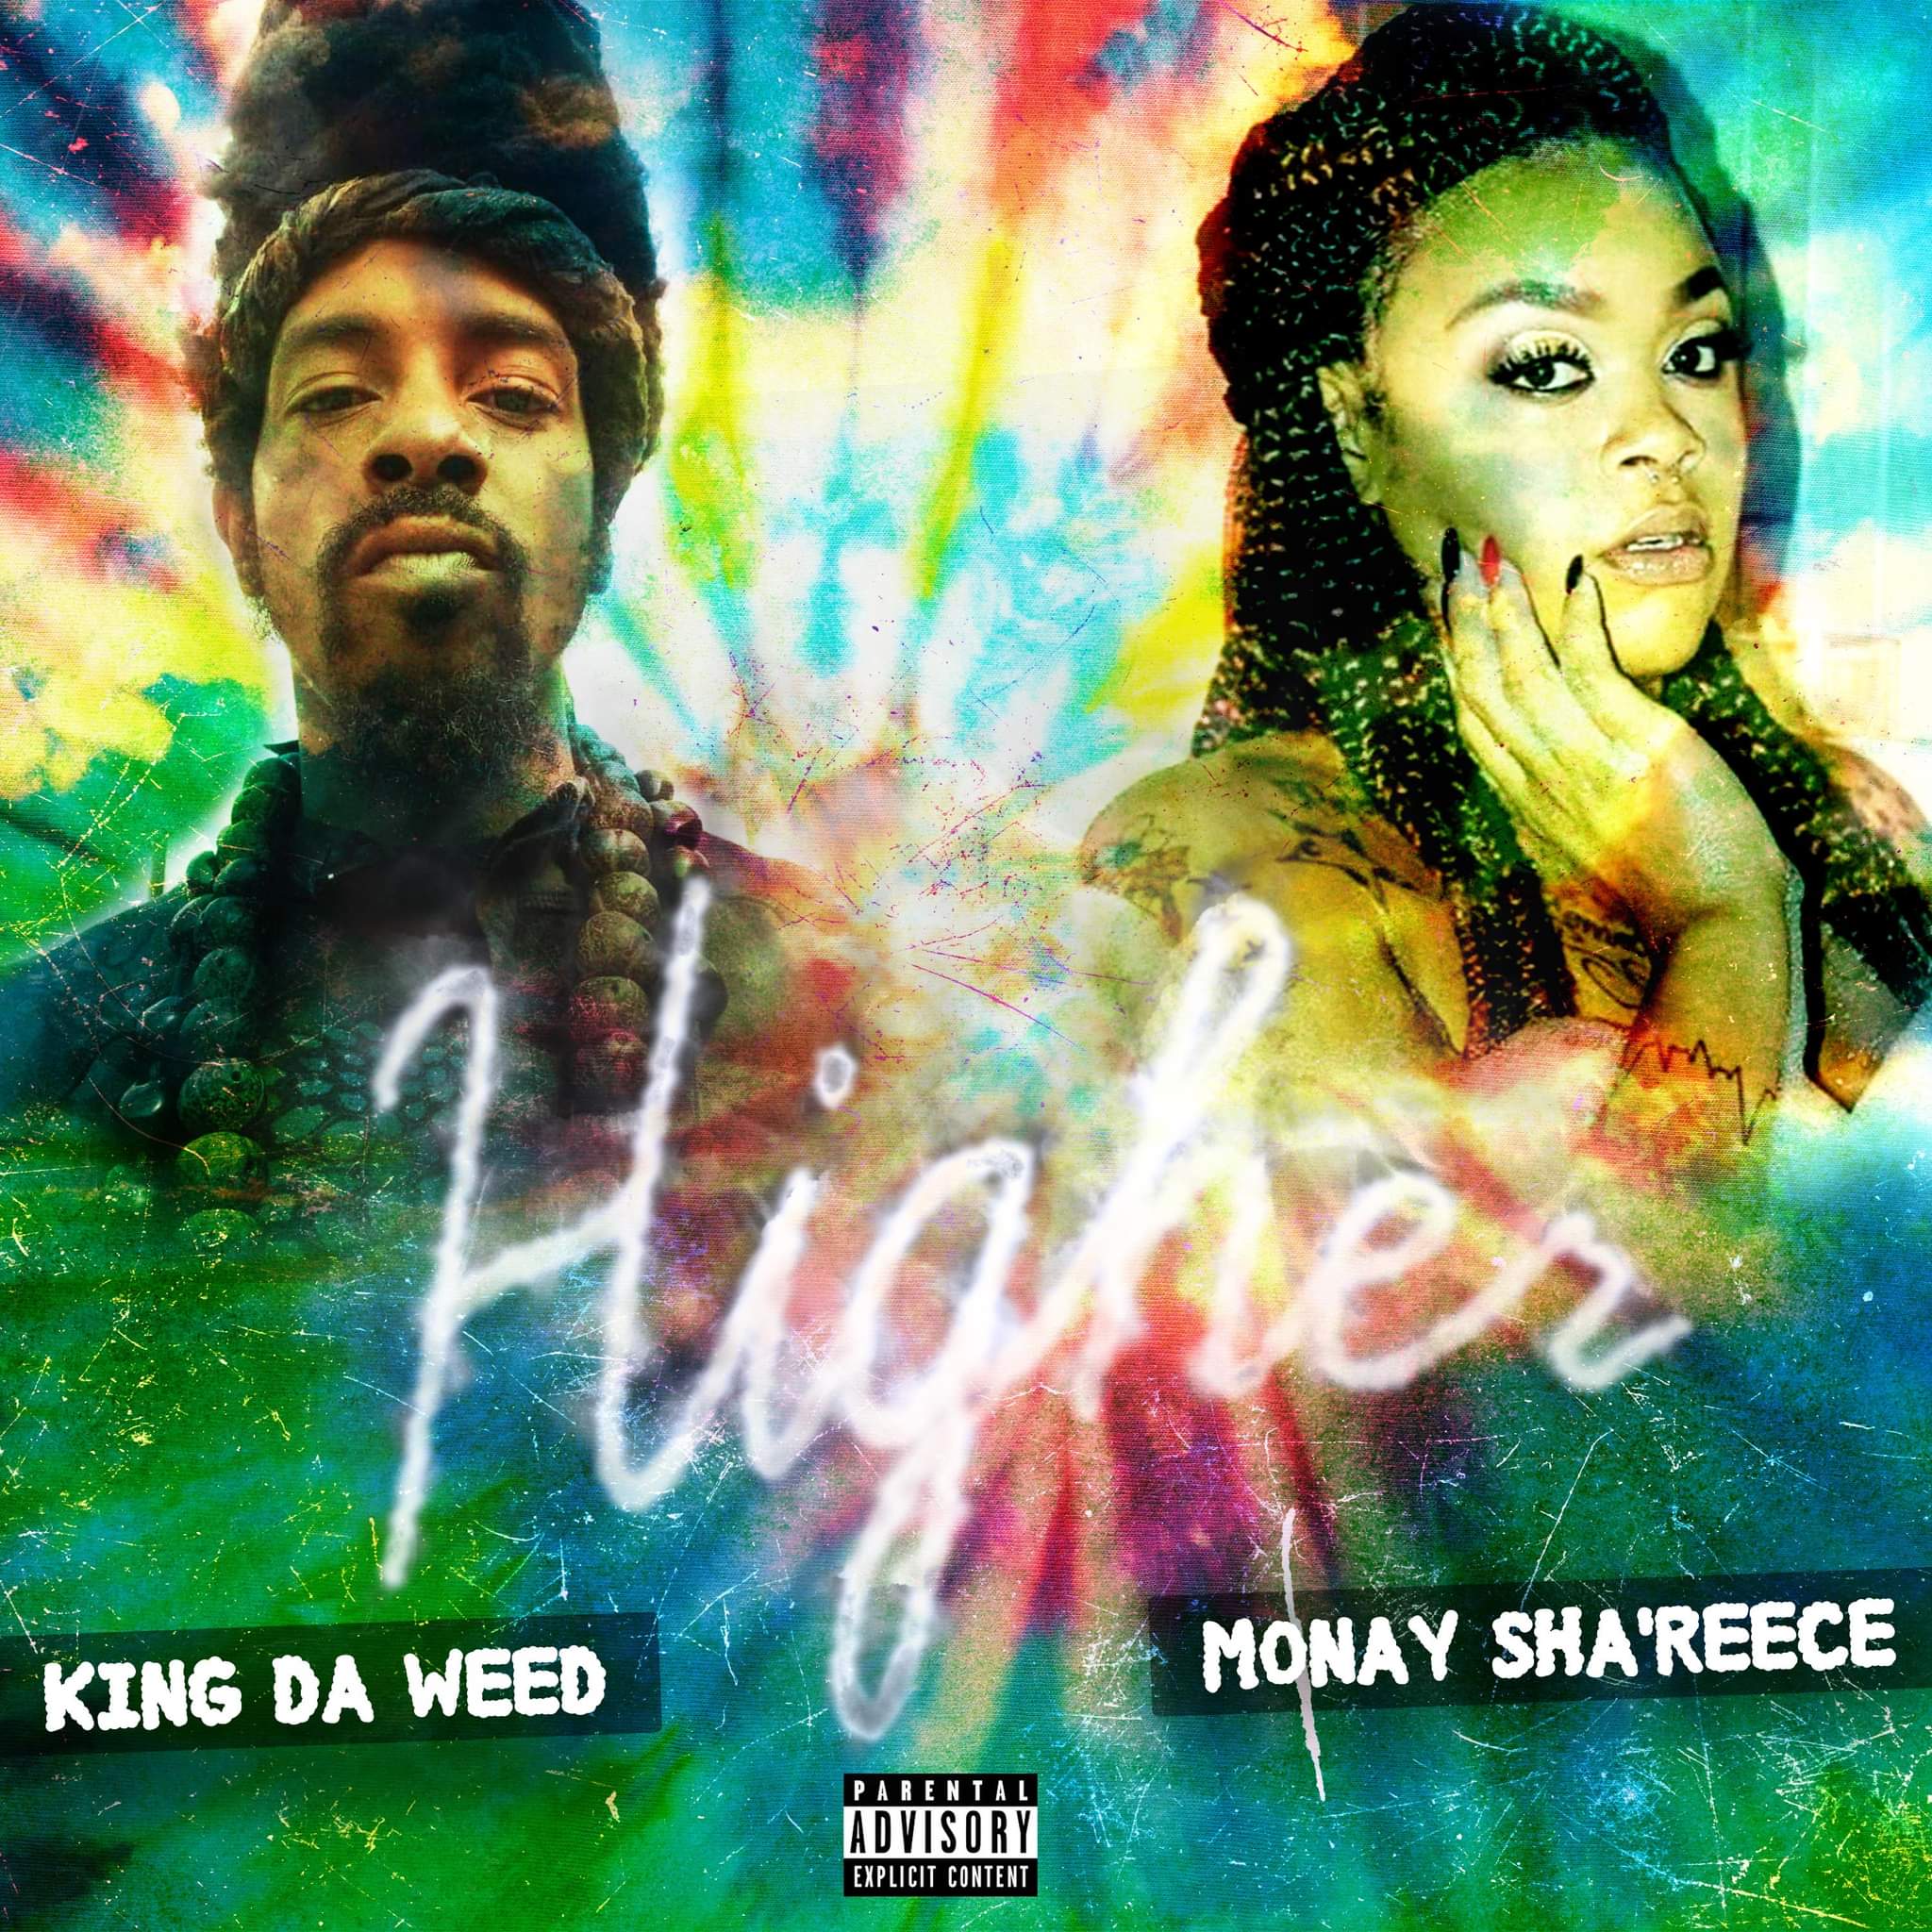 Monay Sha’Reece & King Daweed release their new single “Higher”